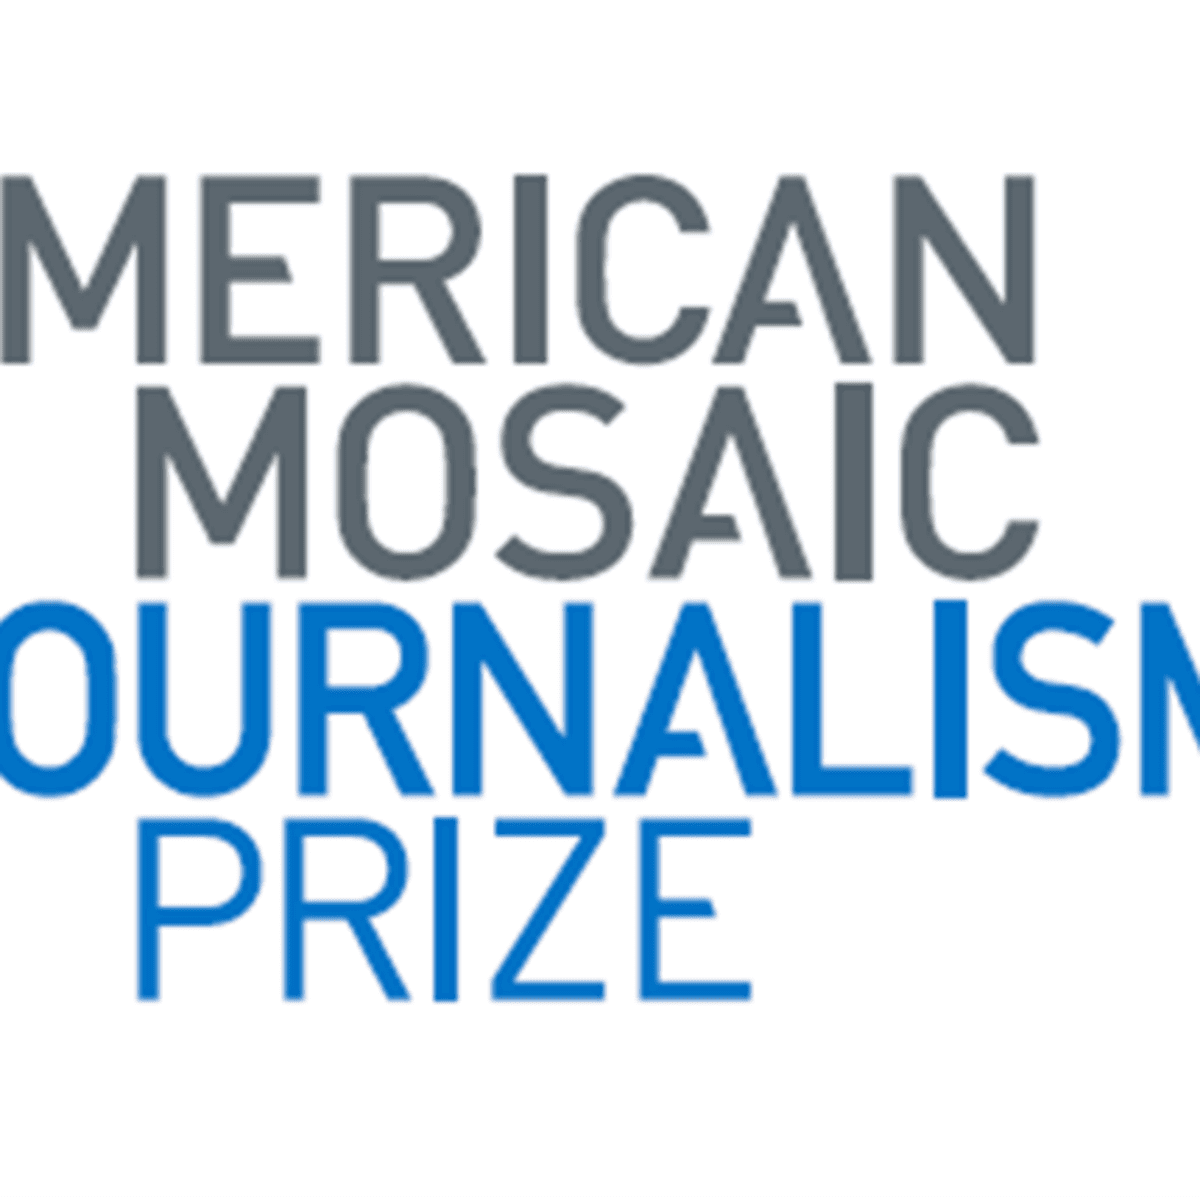 American Mosaic Journalism Prize - Heising-Simons Foundation